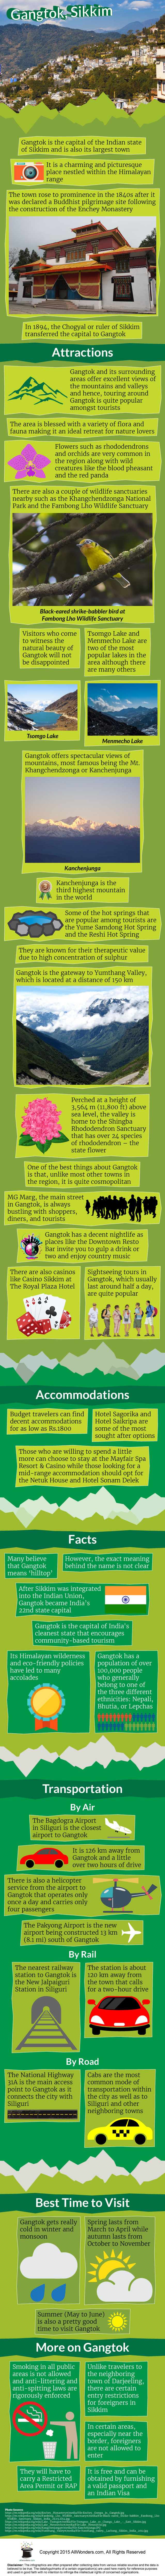 Gangtok Infographic